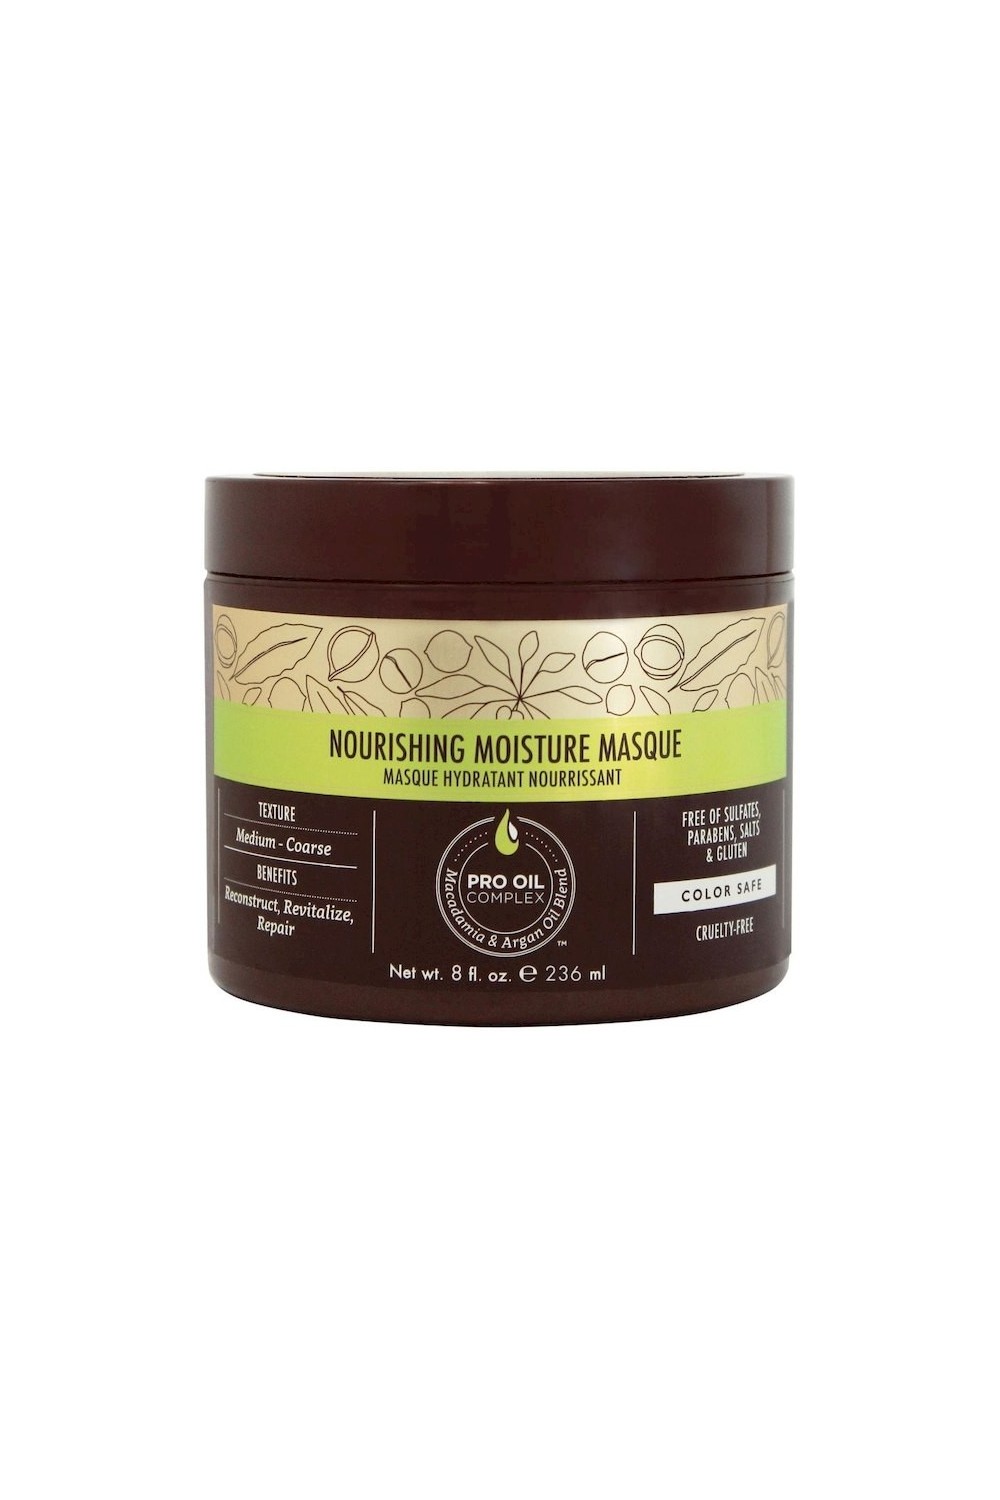 MACADAMIA NATURAL OIL - Macadamia Nourishing Moisture Masque 236ml